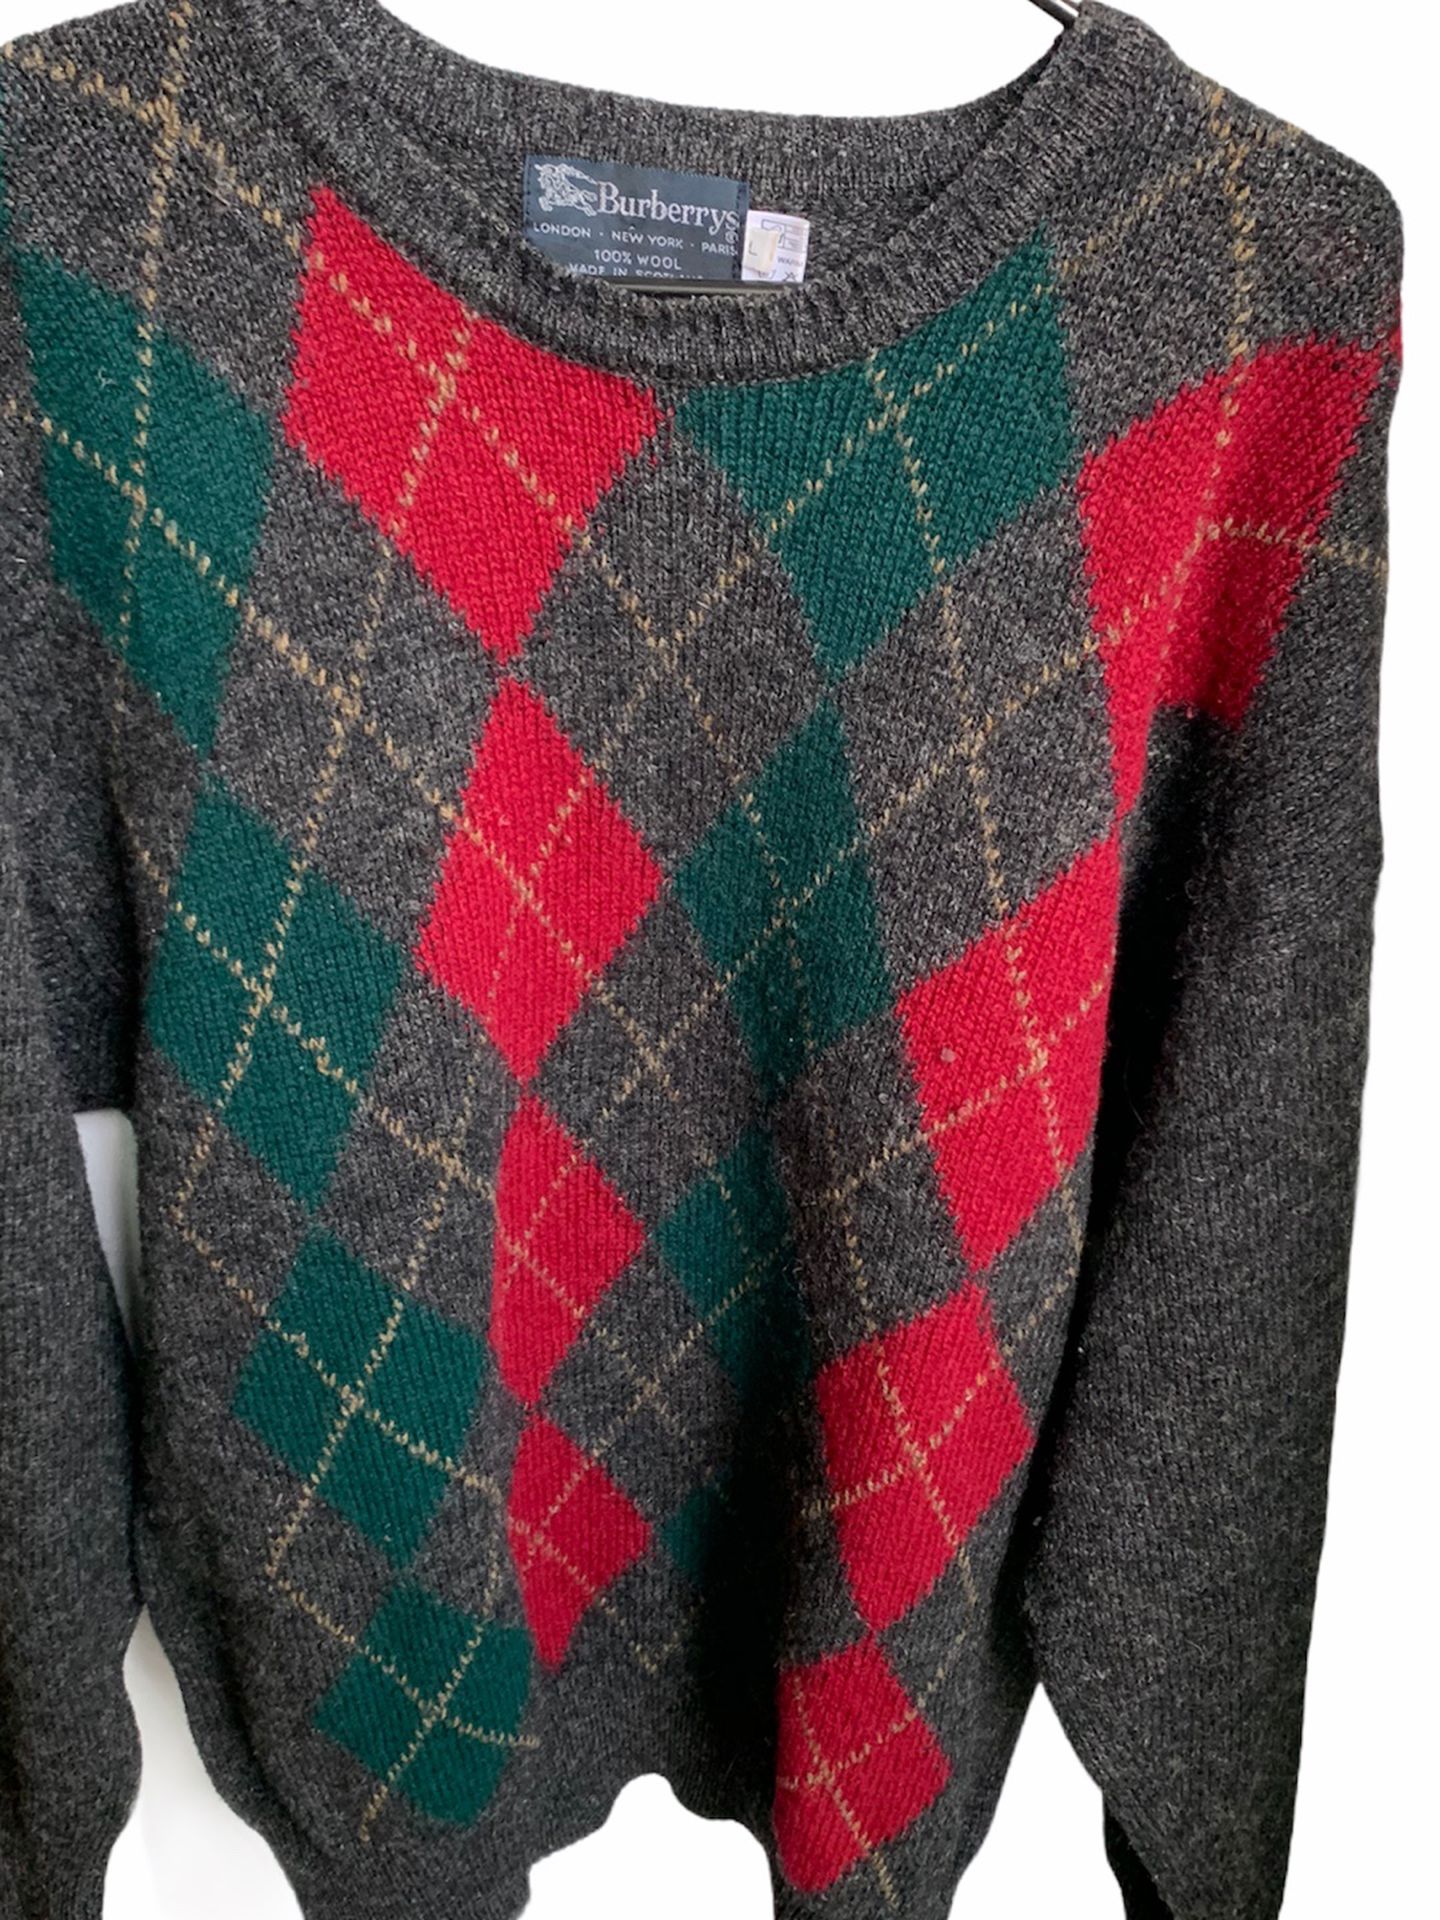 Vintage Burberry Sweater